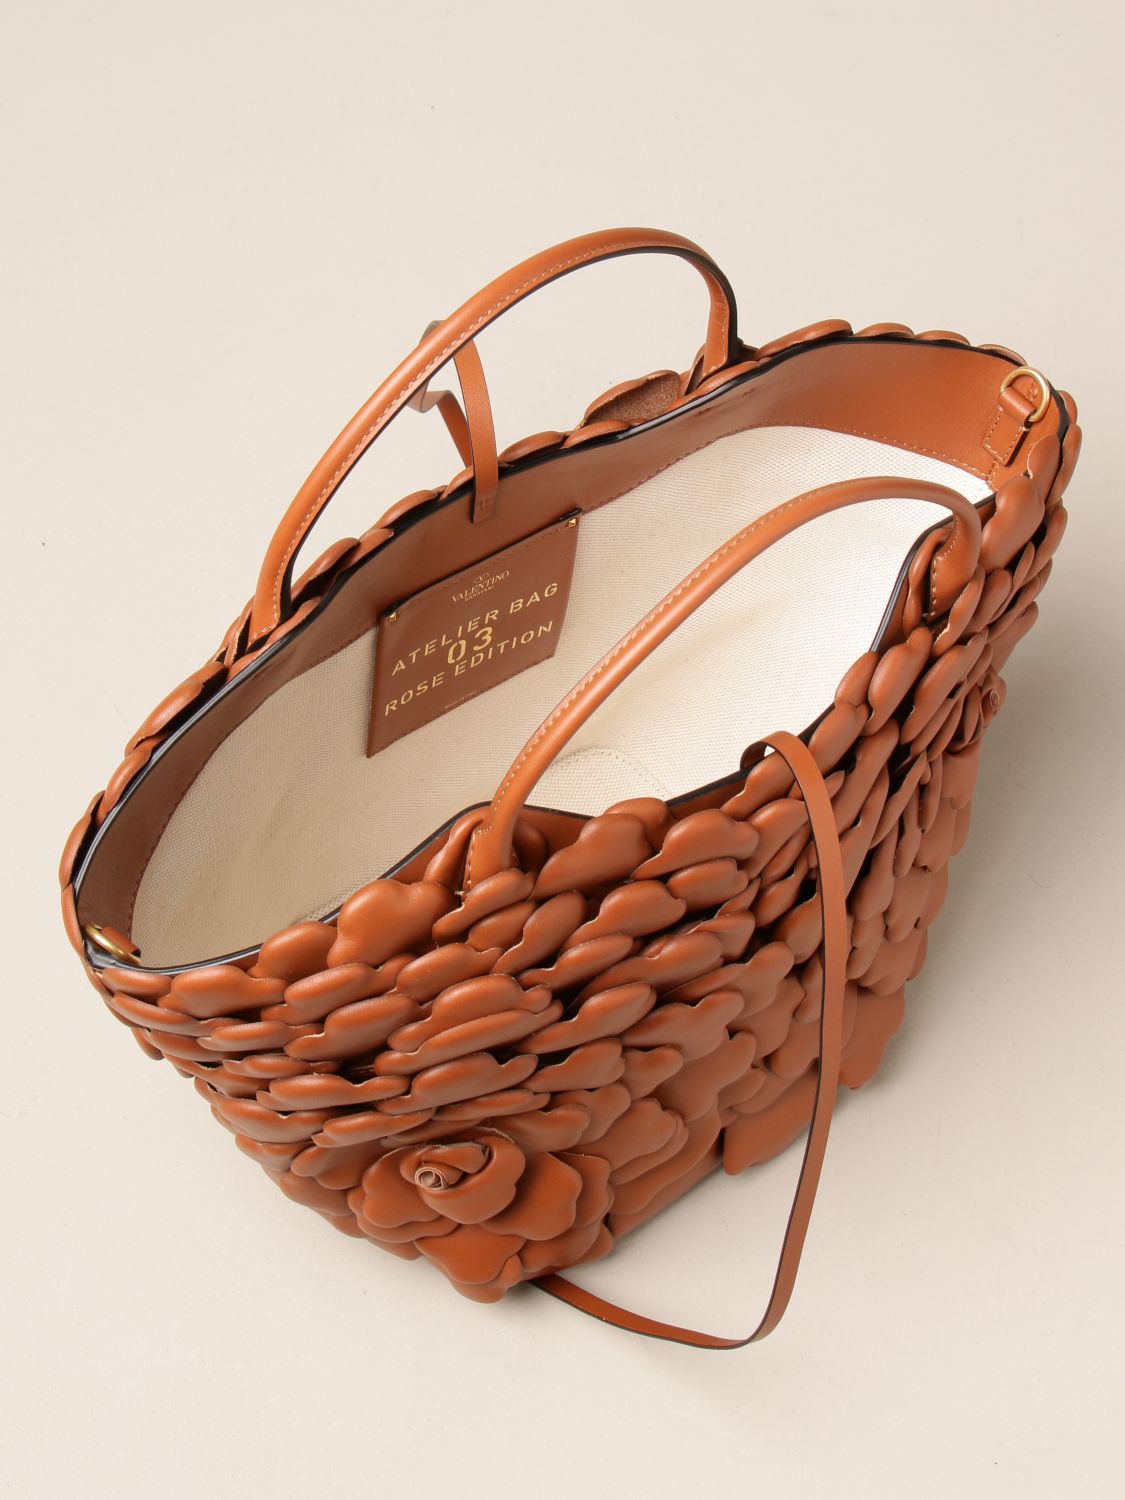 Valentino Garavani's The Atelier Bag 03 Rose Edition - BagAddicts